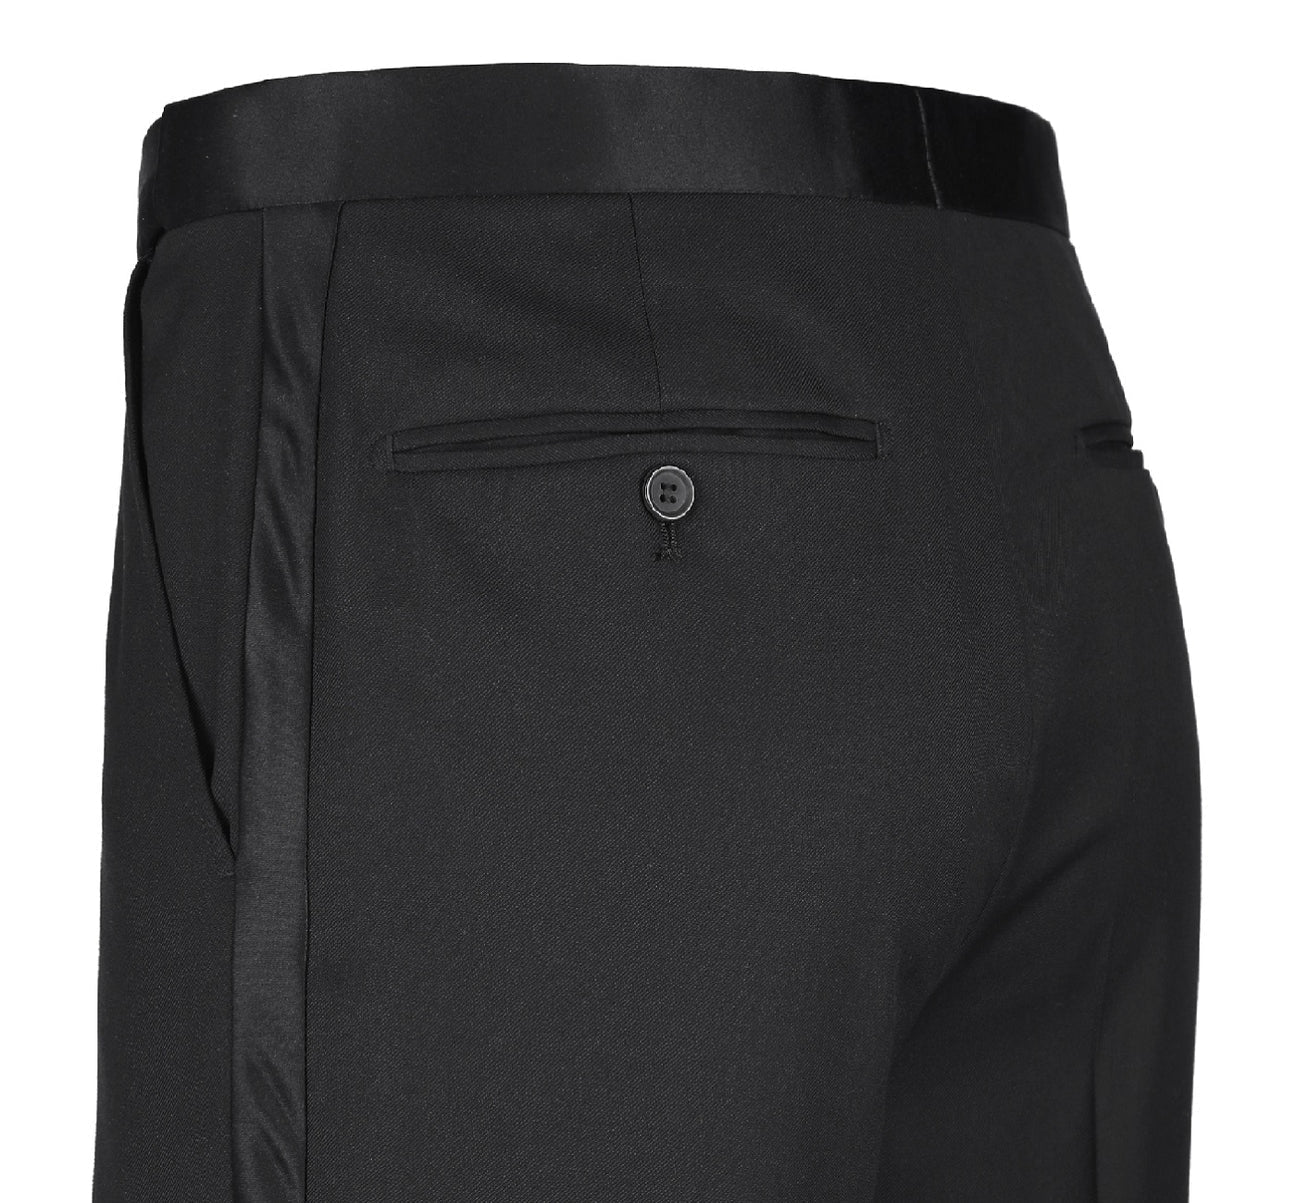 RENOIR Slim Fit Black Tuxedo Peak Lapel Dress Suit 201-1